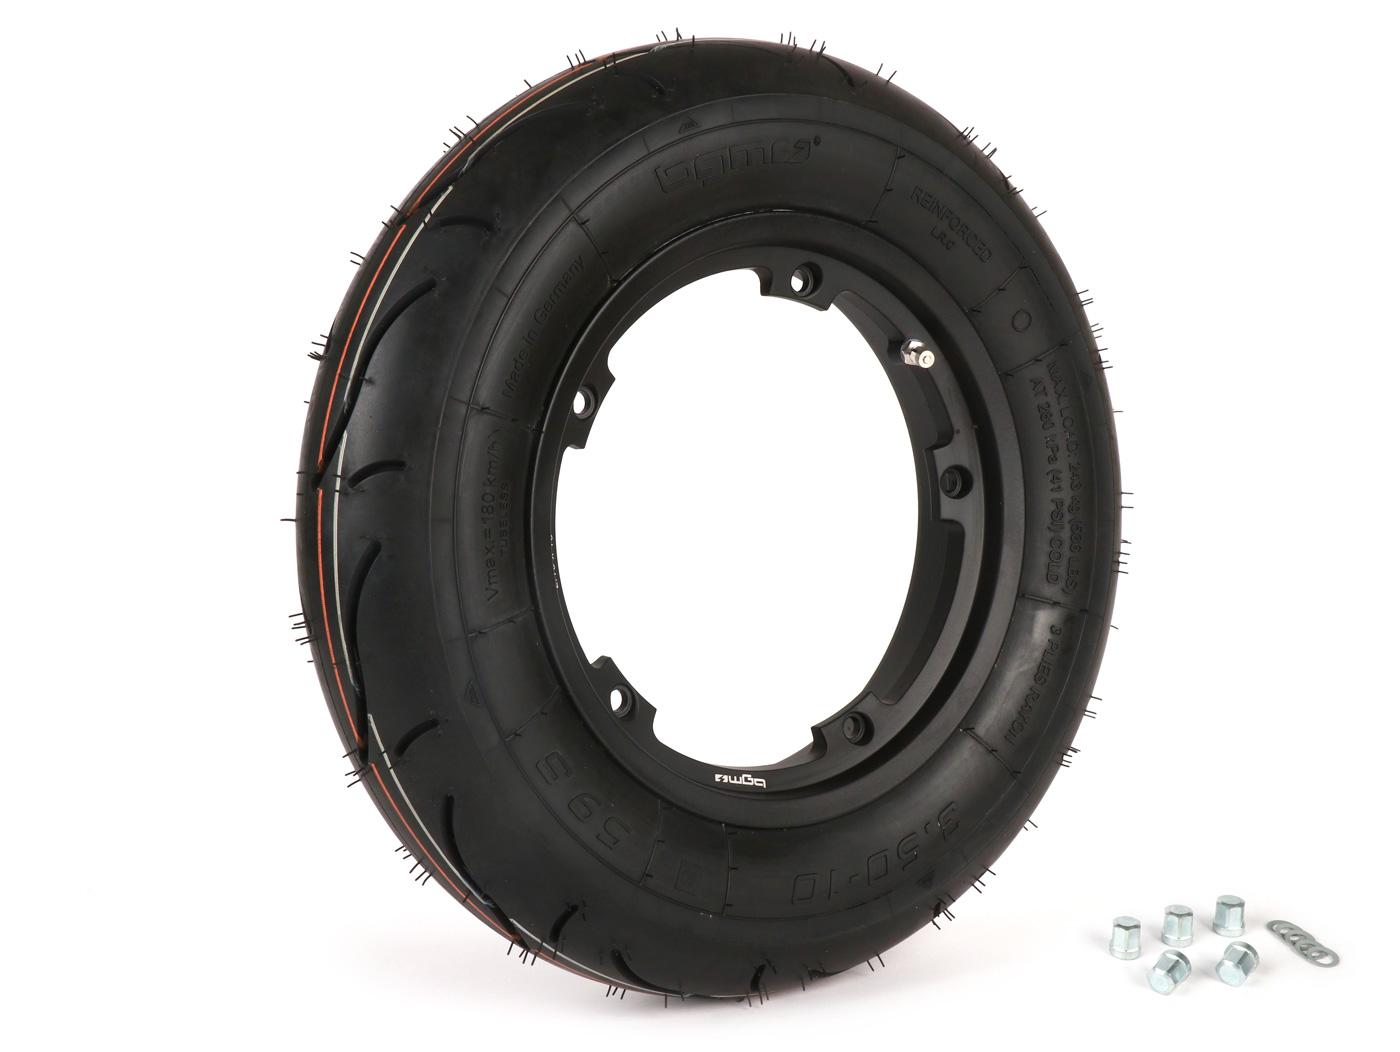 Tire and wheel kit -BGM Sport, tubeless, Vespa- 3.50 - 10 inch TL 59S (reinforced) - 2.10-10 black rim